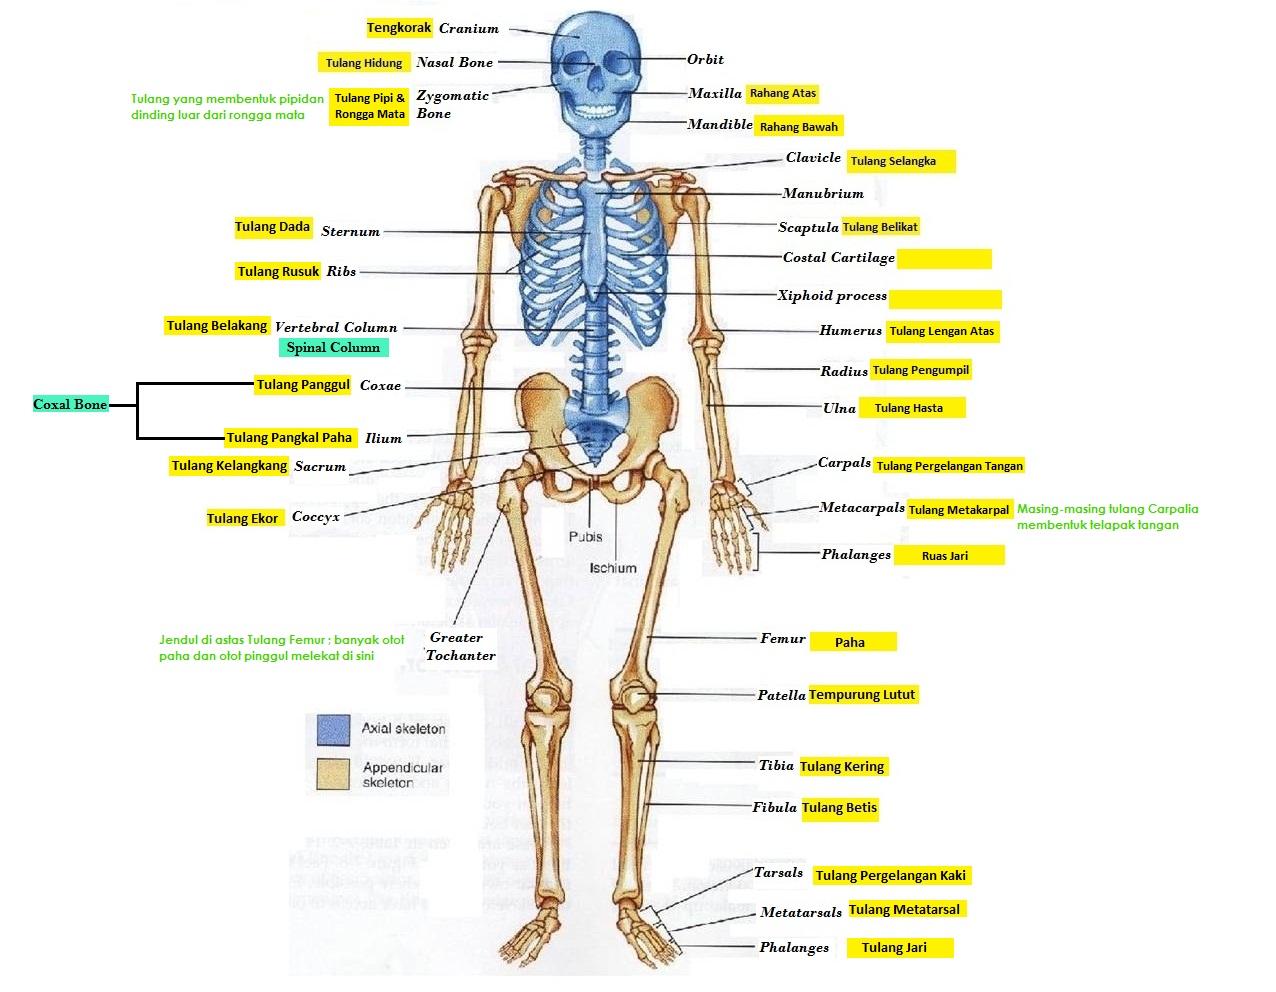 10 Fakta Tentang Tulang Manusia | BLOGCASK